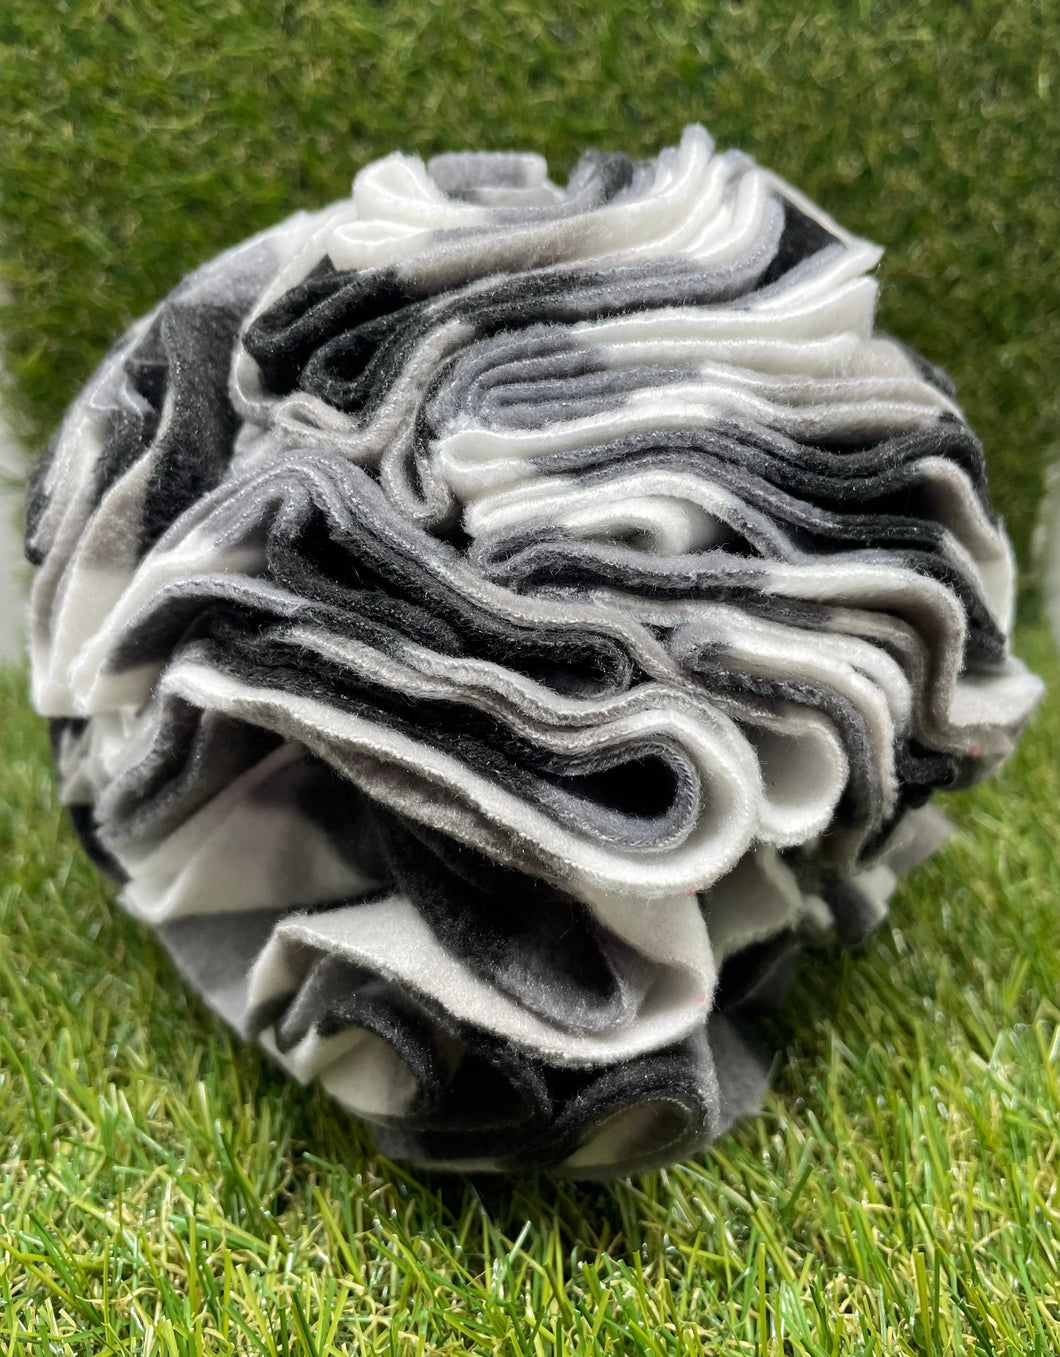 Snuffle ball blacks and greys, 6 inch size